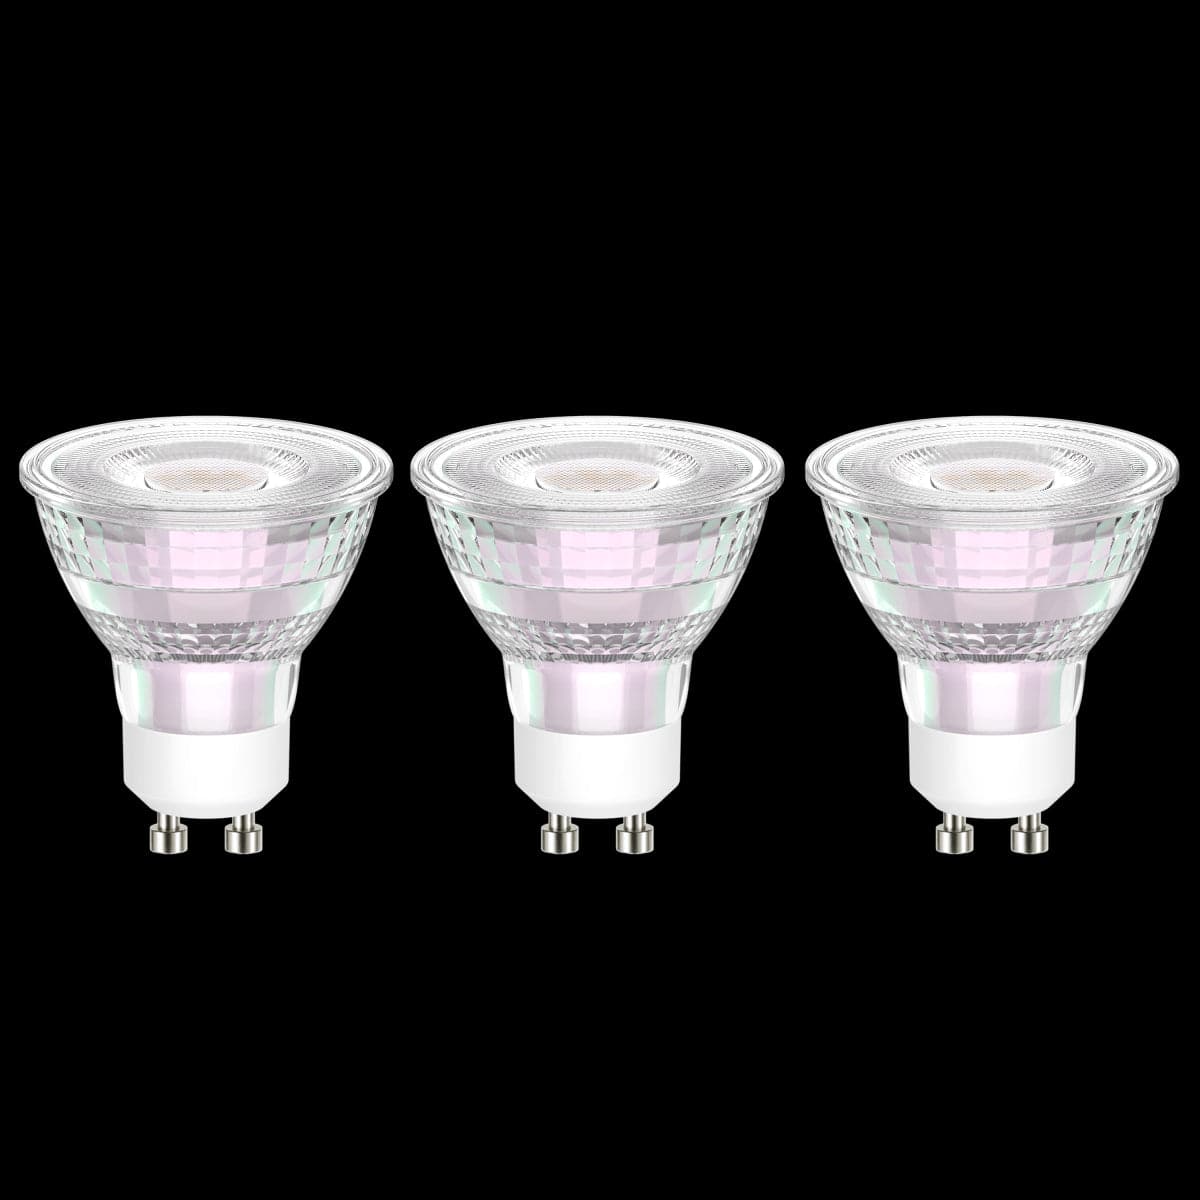 3 LED BULBS GU10 50W CLEAR WARM LIGHT